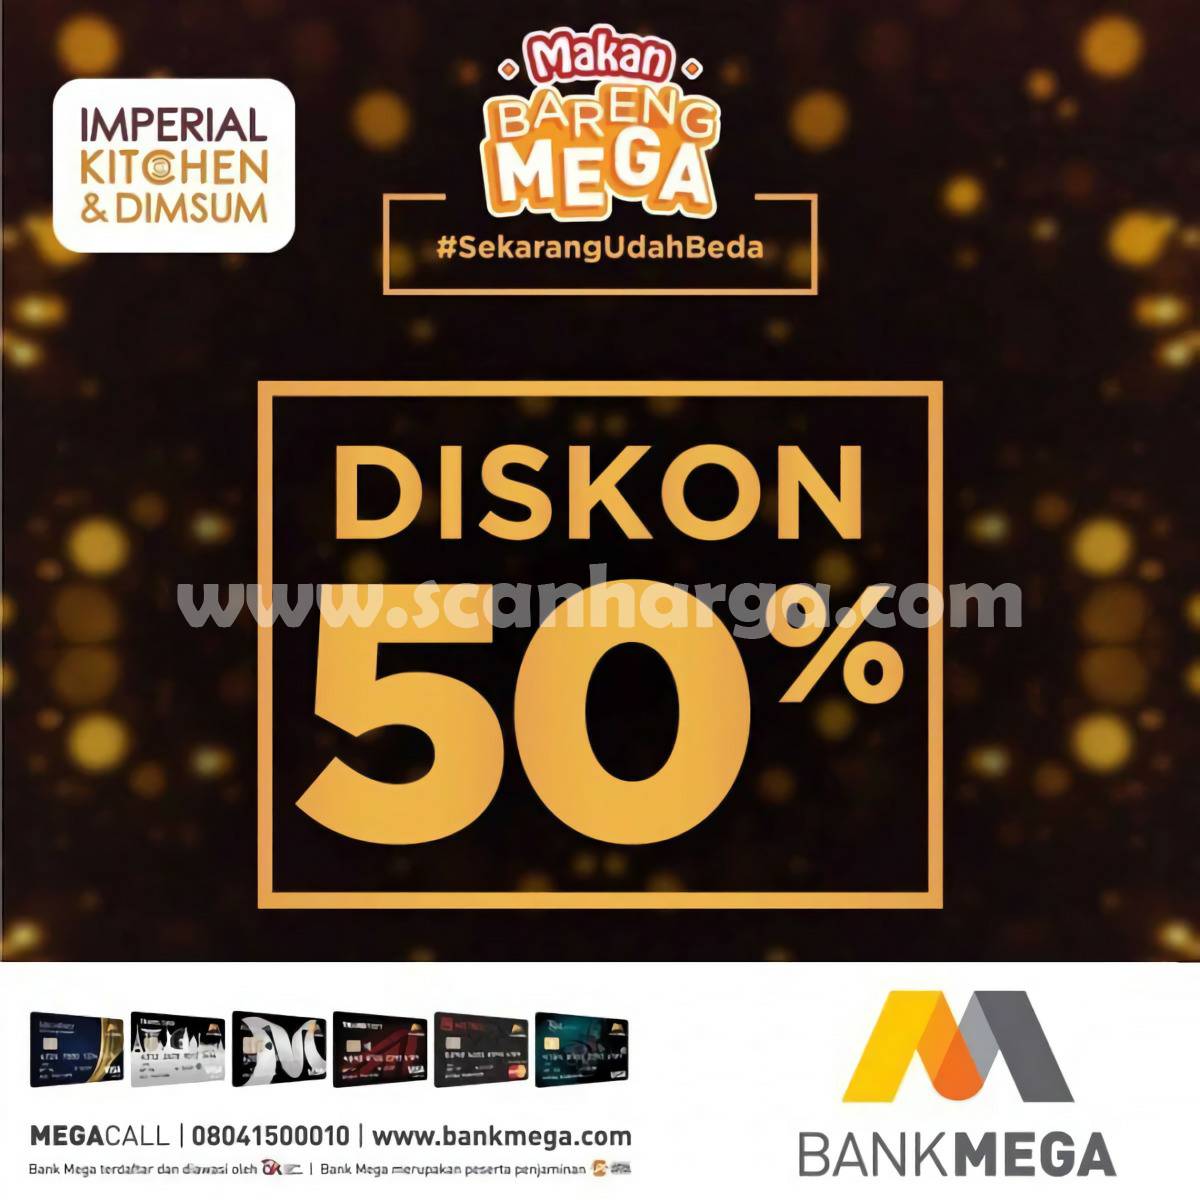 Promo IMPERIAL KITCHEN & DIMSUM – Diskon 50% dengan Kartu Kredit Bank Mega